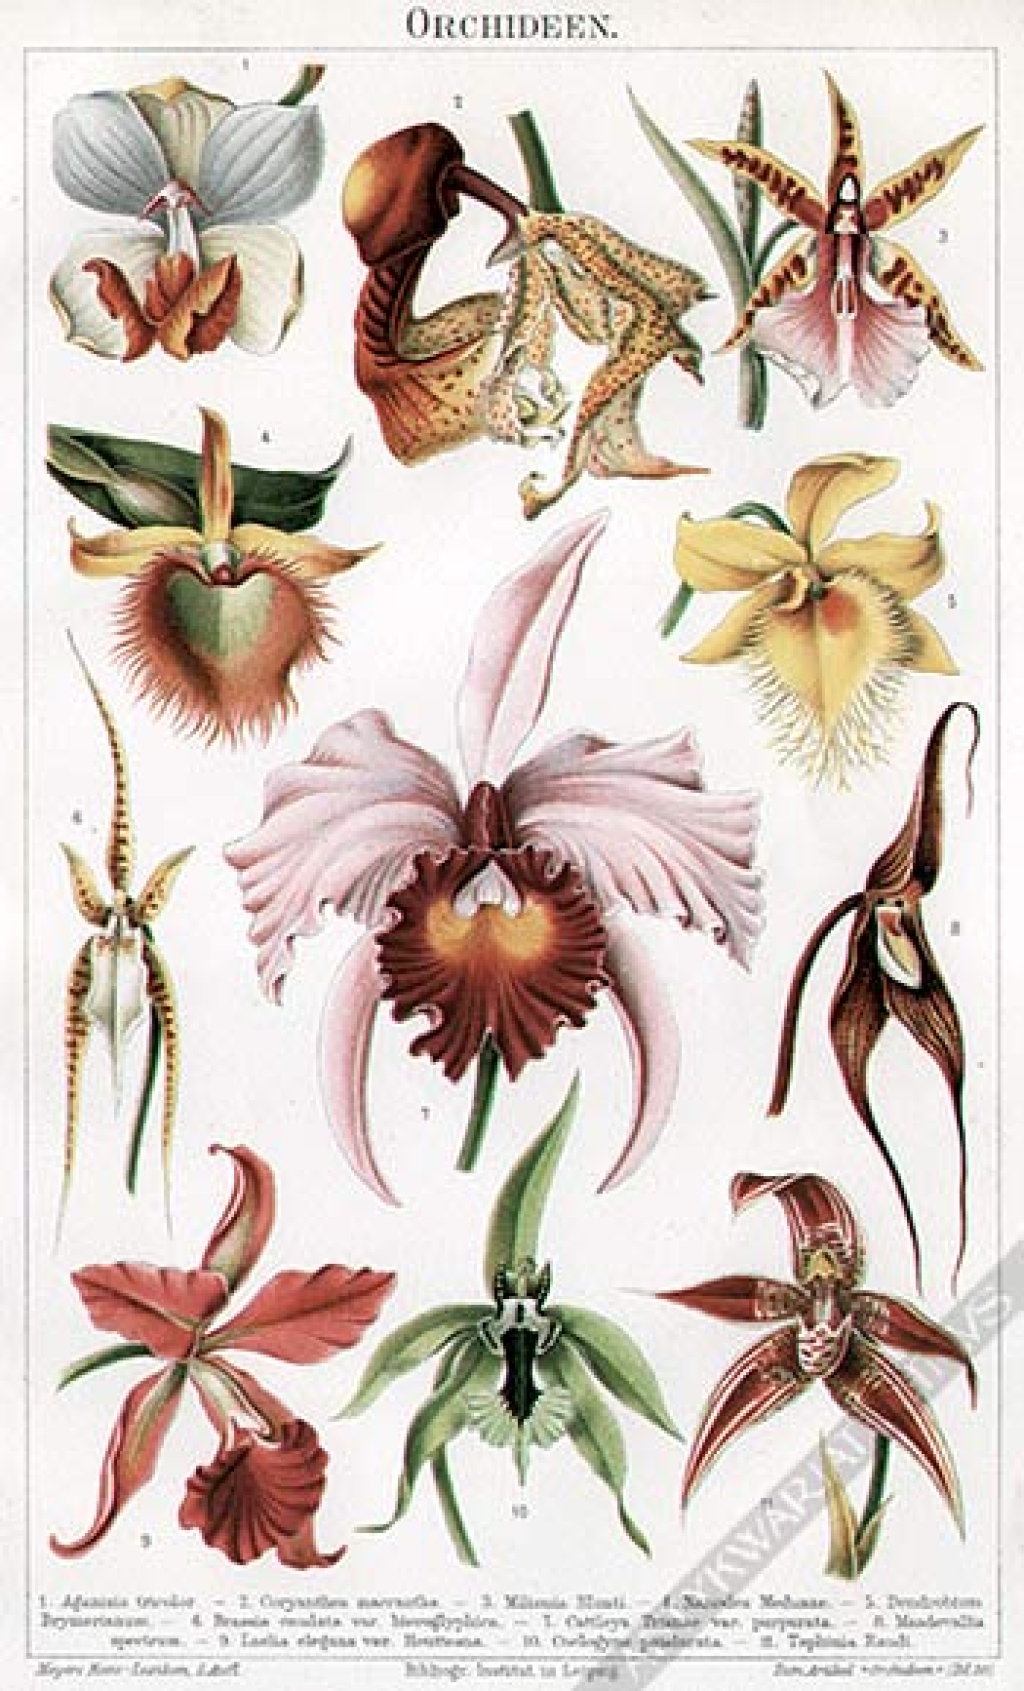 [rycina, 1900] Orchideen [Storczyki]